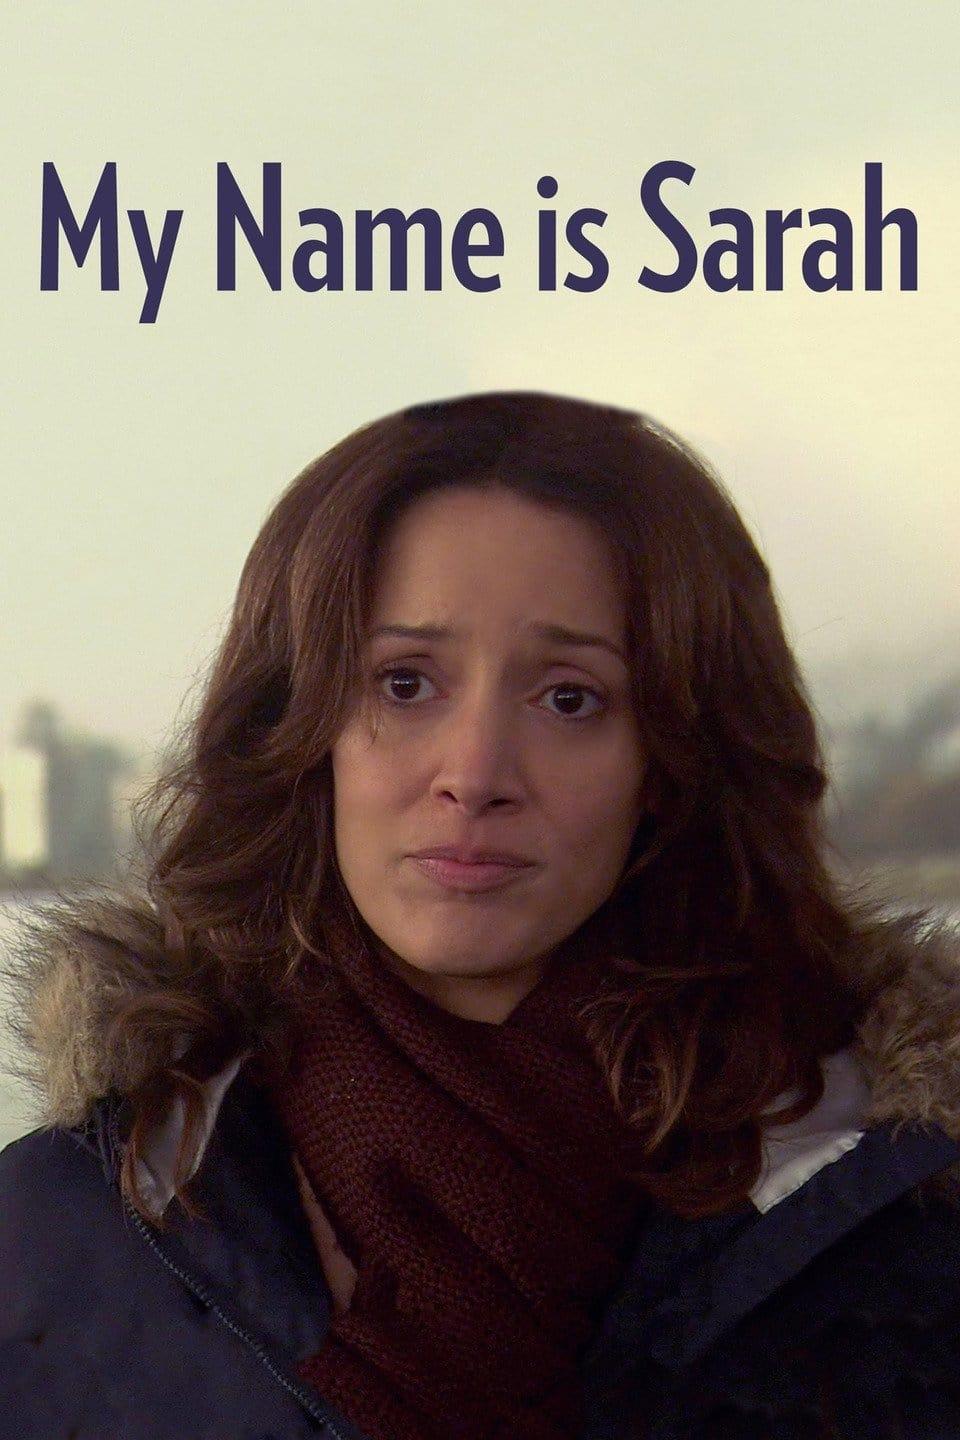 My Name Is Sarah poster